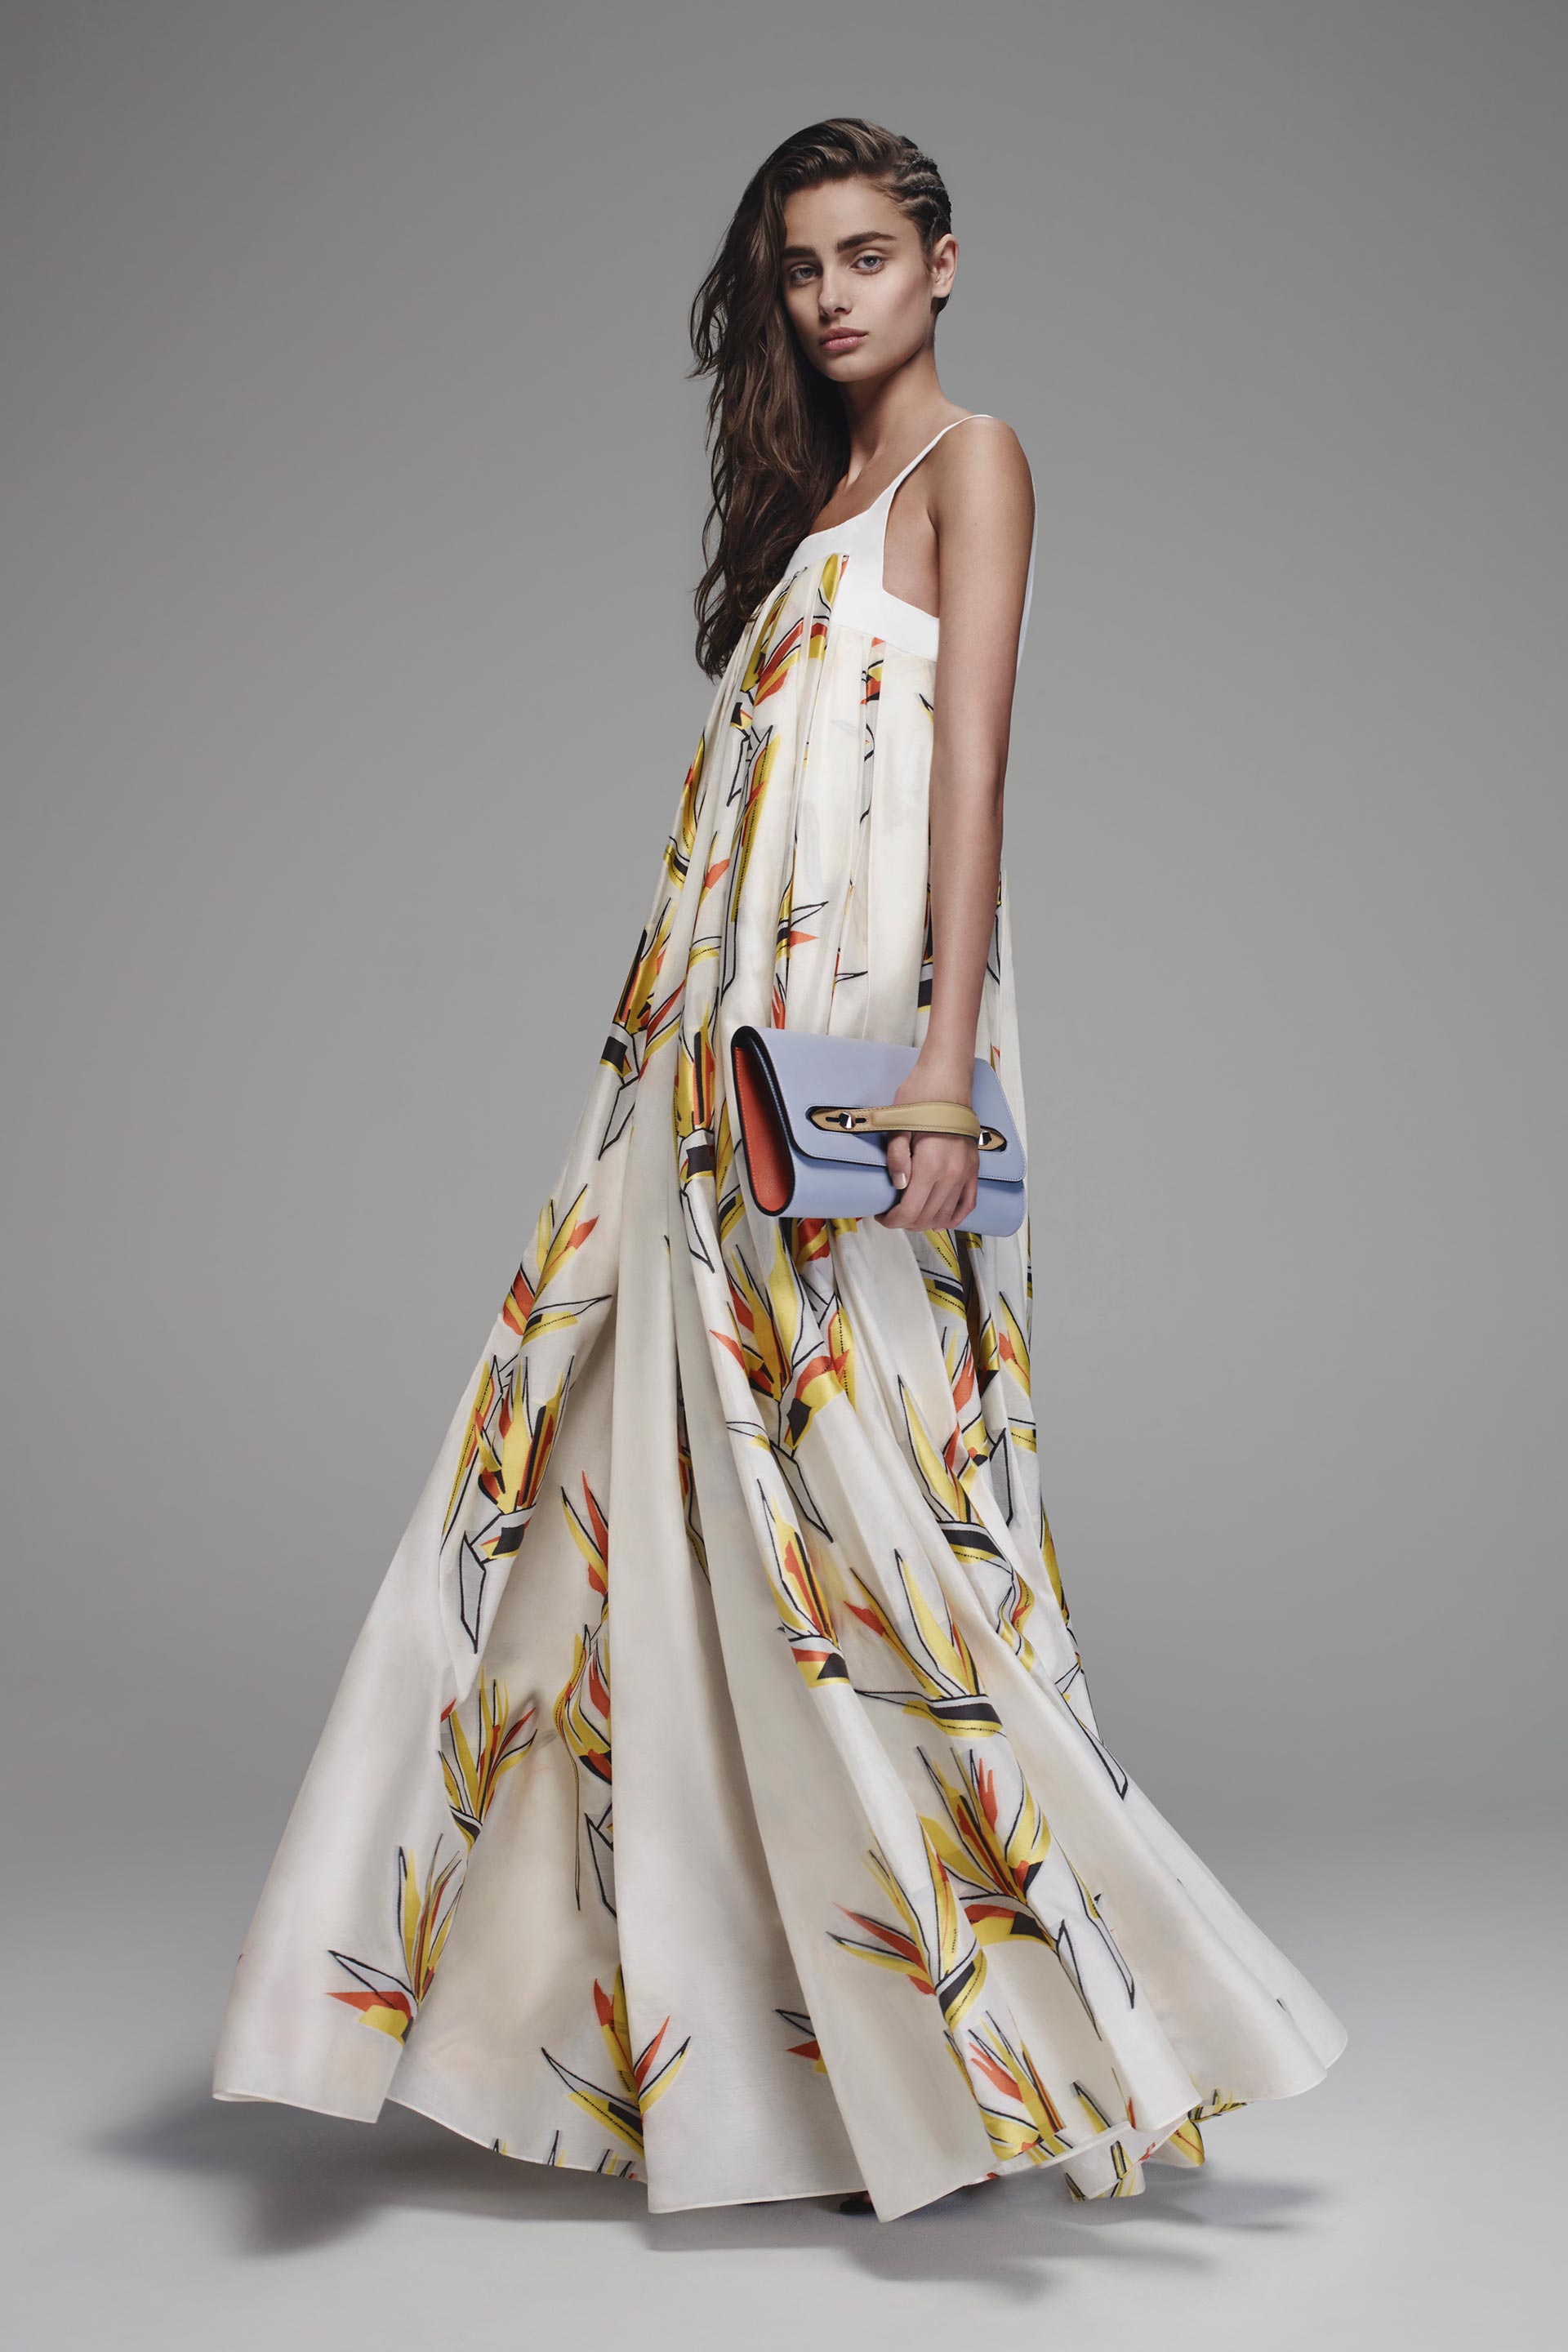  Fendi’s floor length dress with birds of paradise print